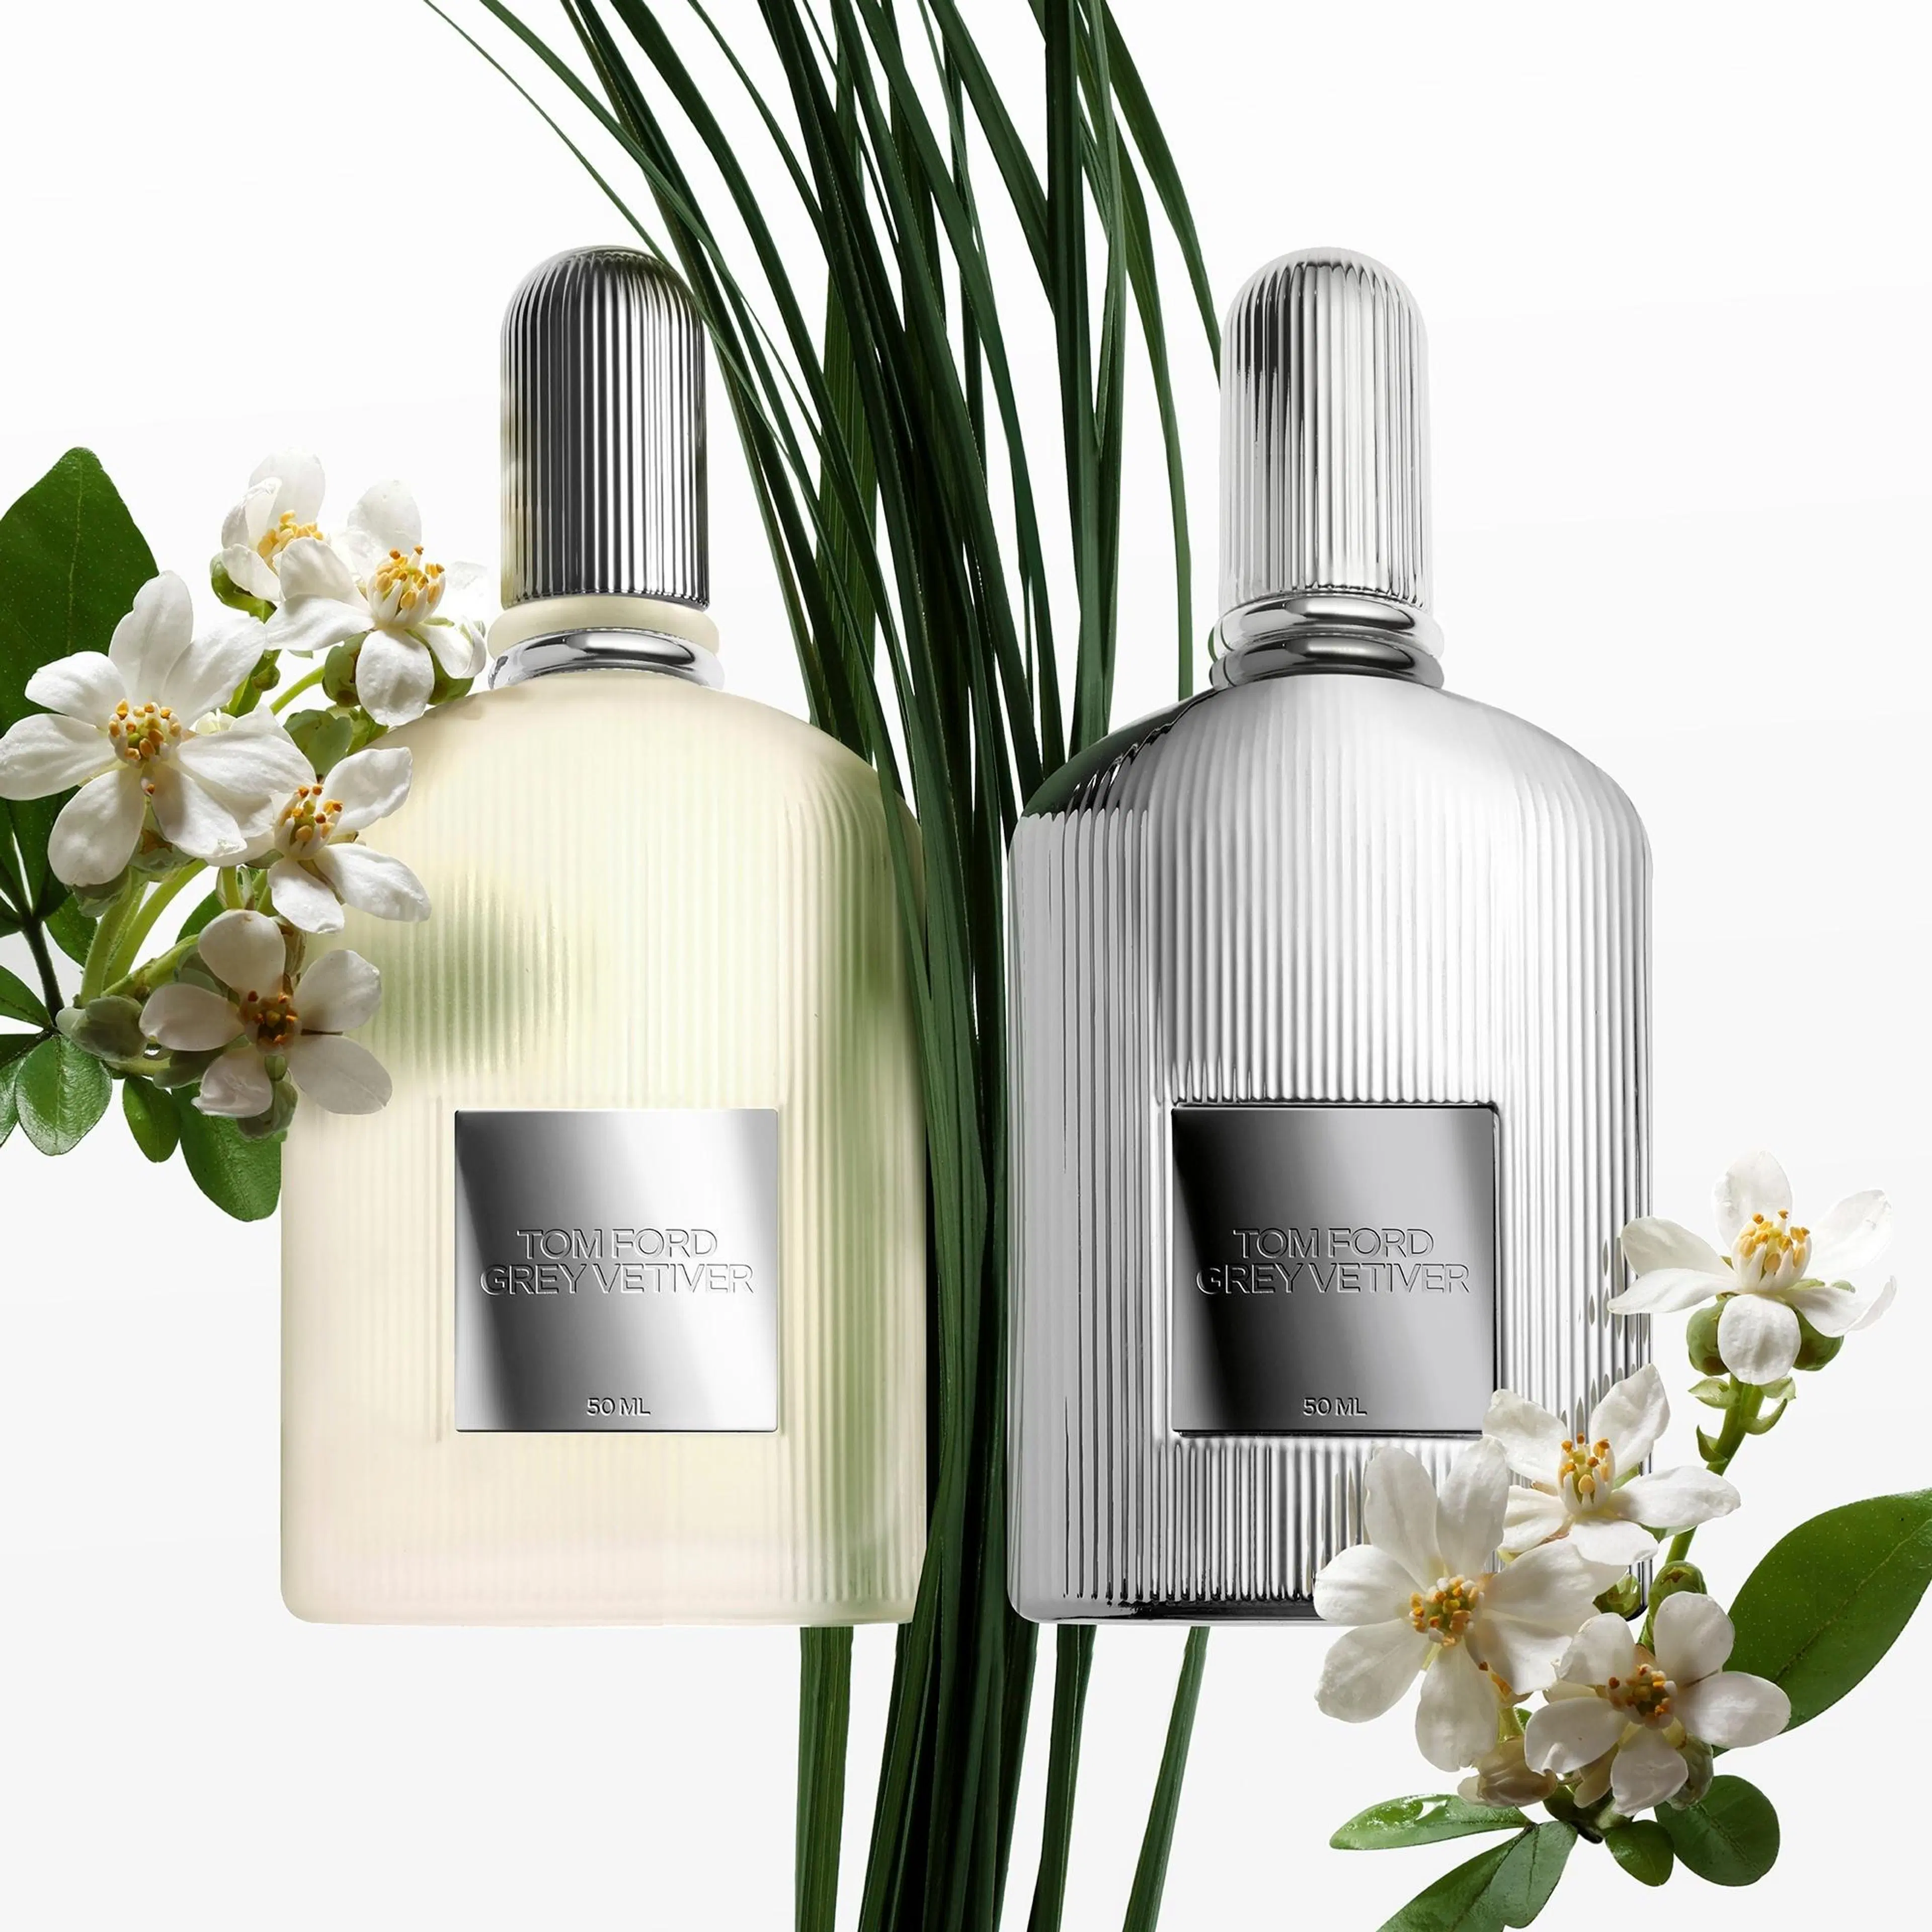 Tom Ford Grey Vetiver Parfum tuoksu 100 ml